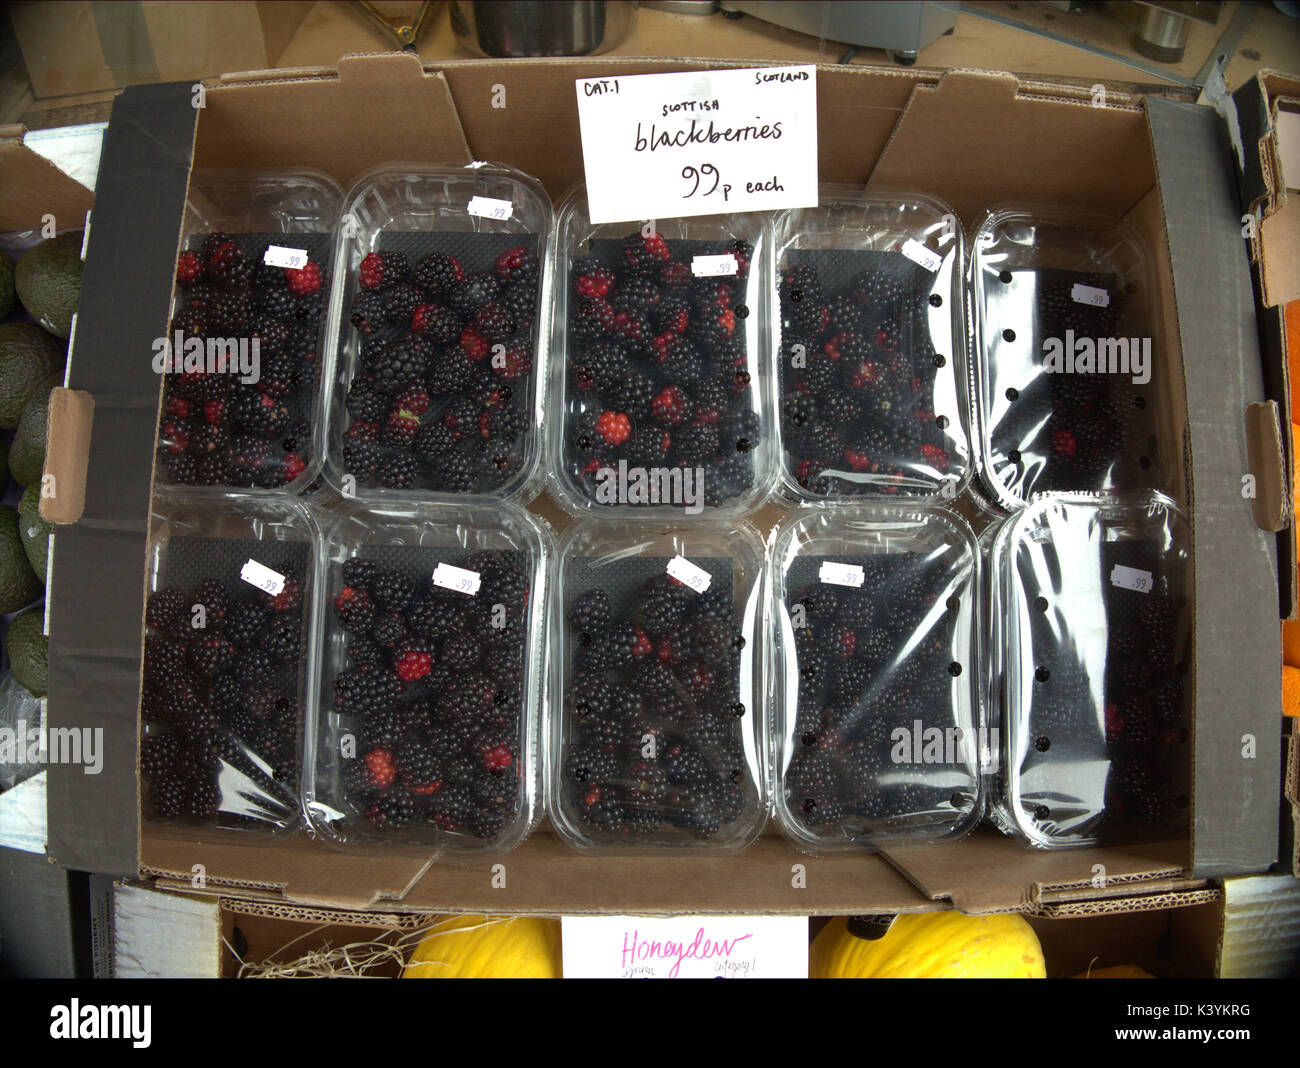 Scottish blackberries cellophane combiners market stall 99p each Stock Photo